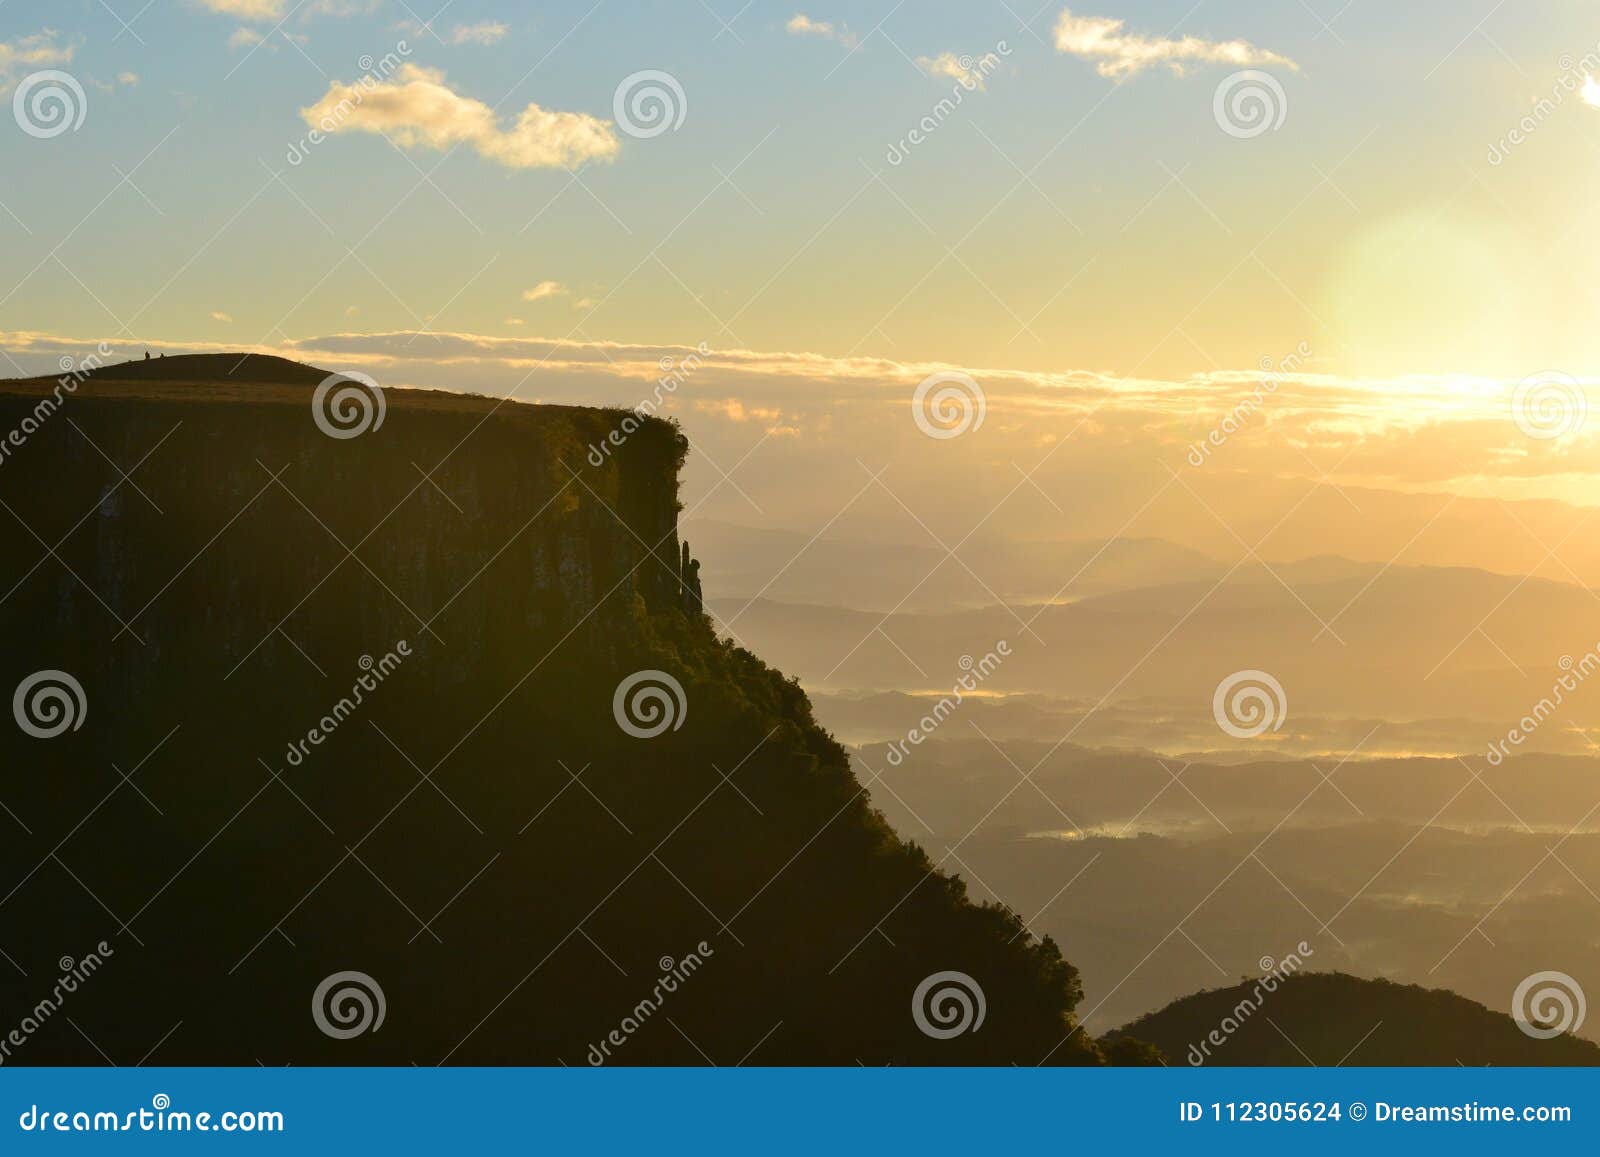 sunrise at serra do rio do rastro - santa catarina - brazil